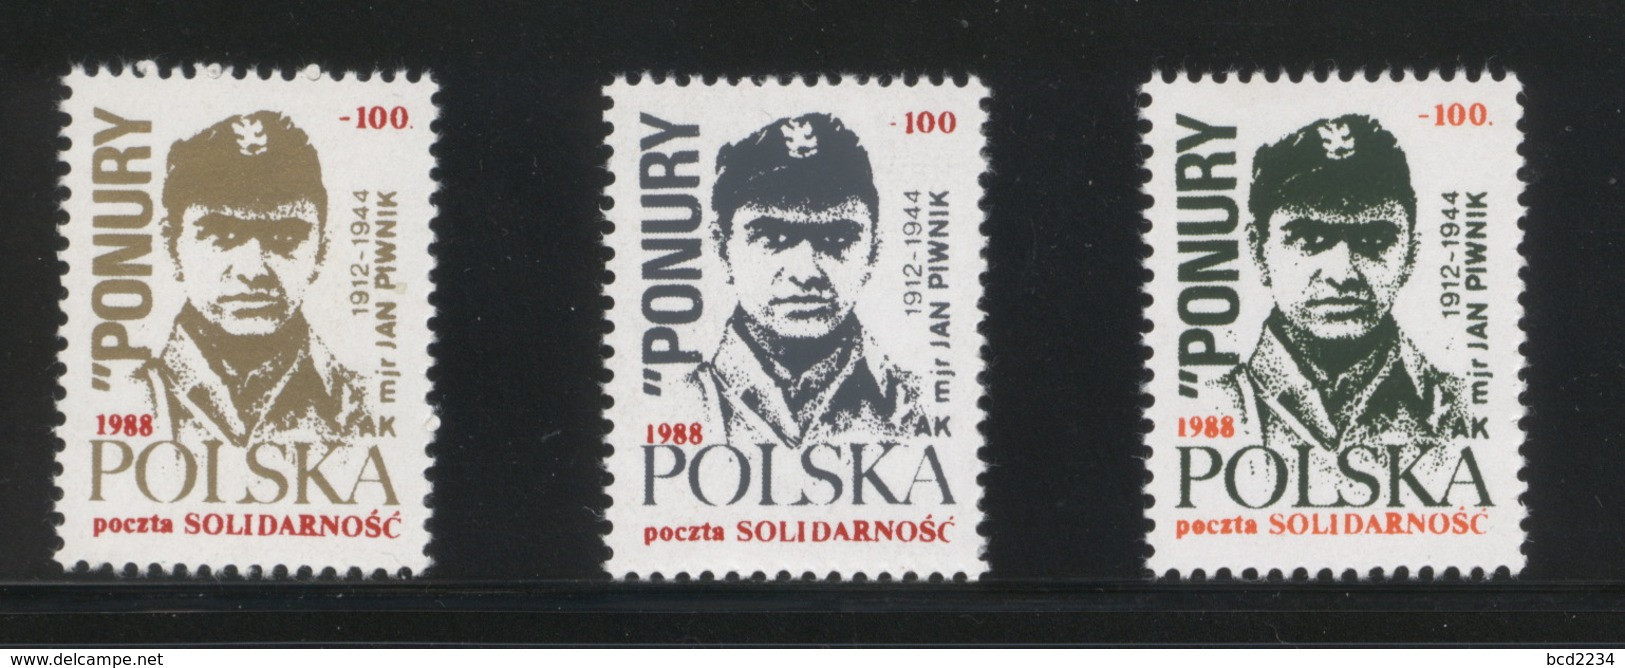 POLAND SOLIDARNOSC JAN PIWNIK WW2 POLICE & SOLDIER AGAINST NAZI GERMANY & RUSSIA SET OF 3 GOVT EXILE FRANCE POLISH ARMY - Vignettes Solidarnosc